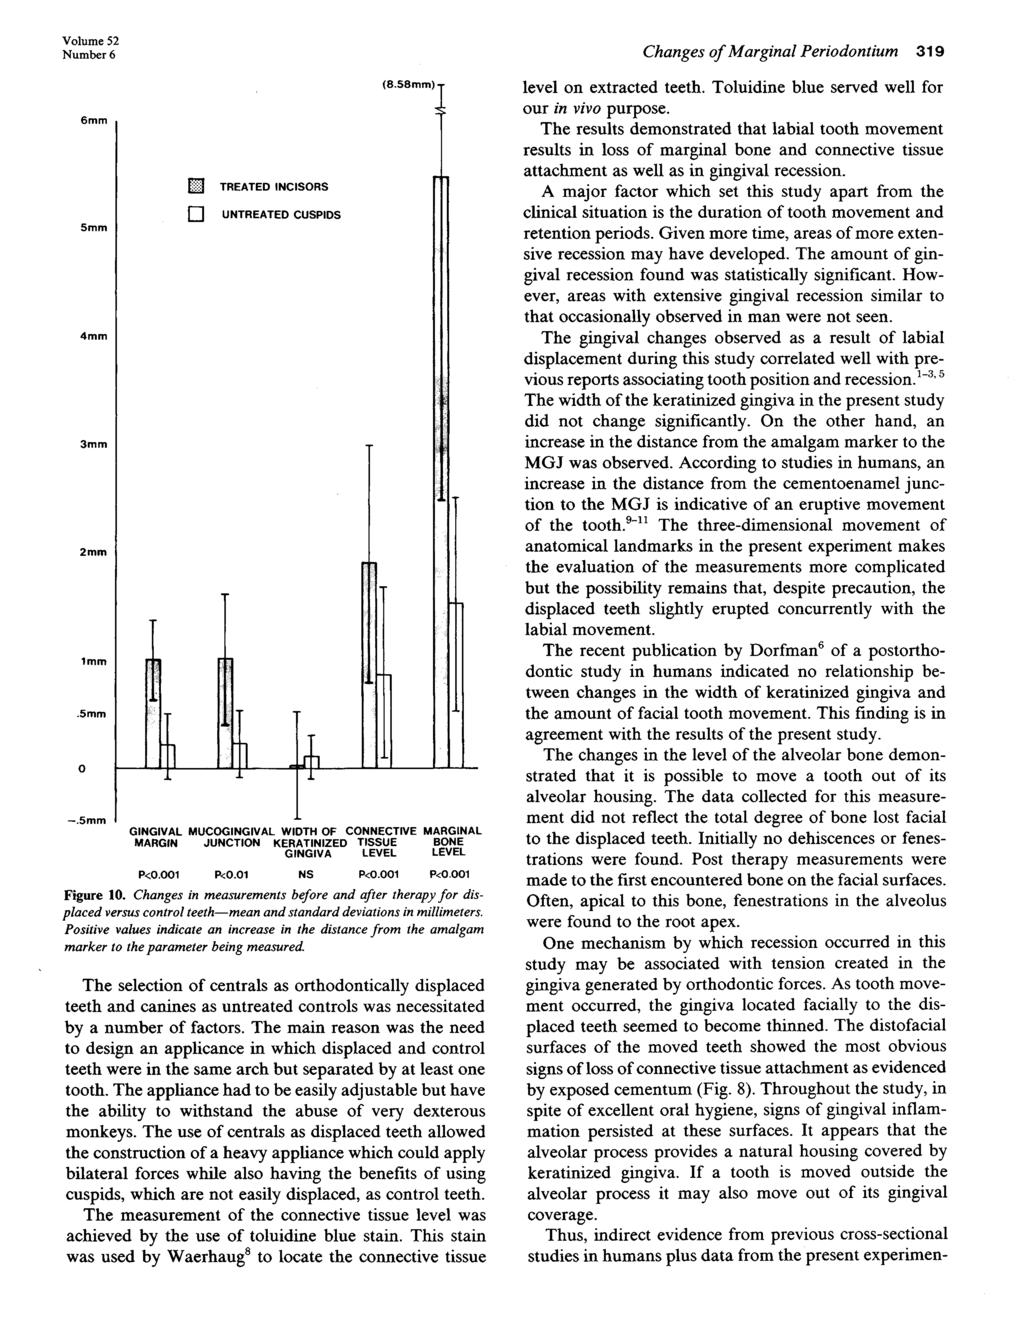 Volume 52 Number Changes ofmarginal Periodontium 3 W] TREATED INCISORS UNTREATED CUSPIDS DL 0 (.